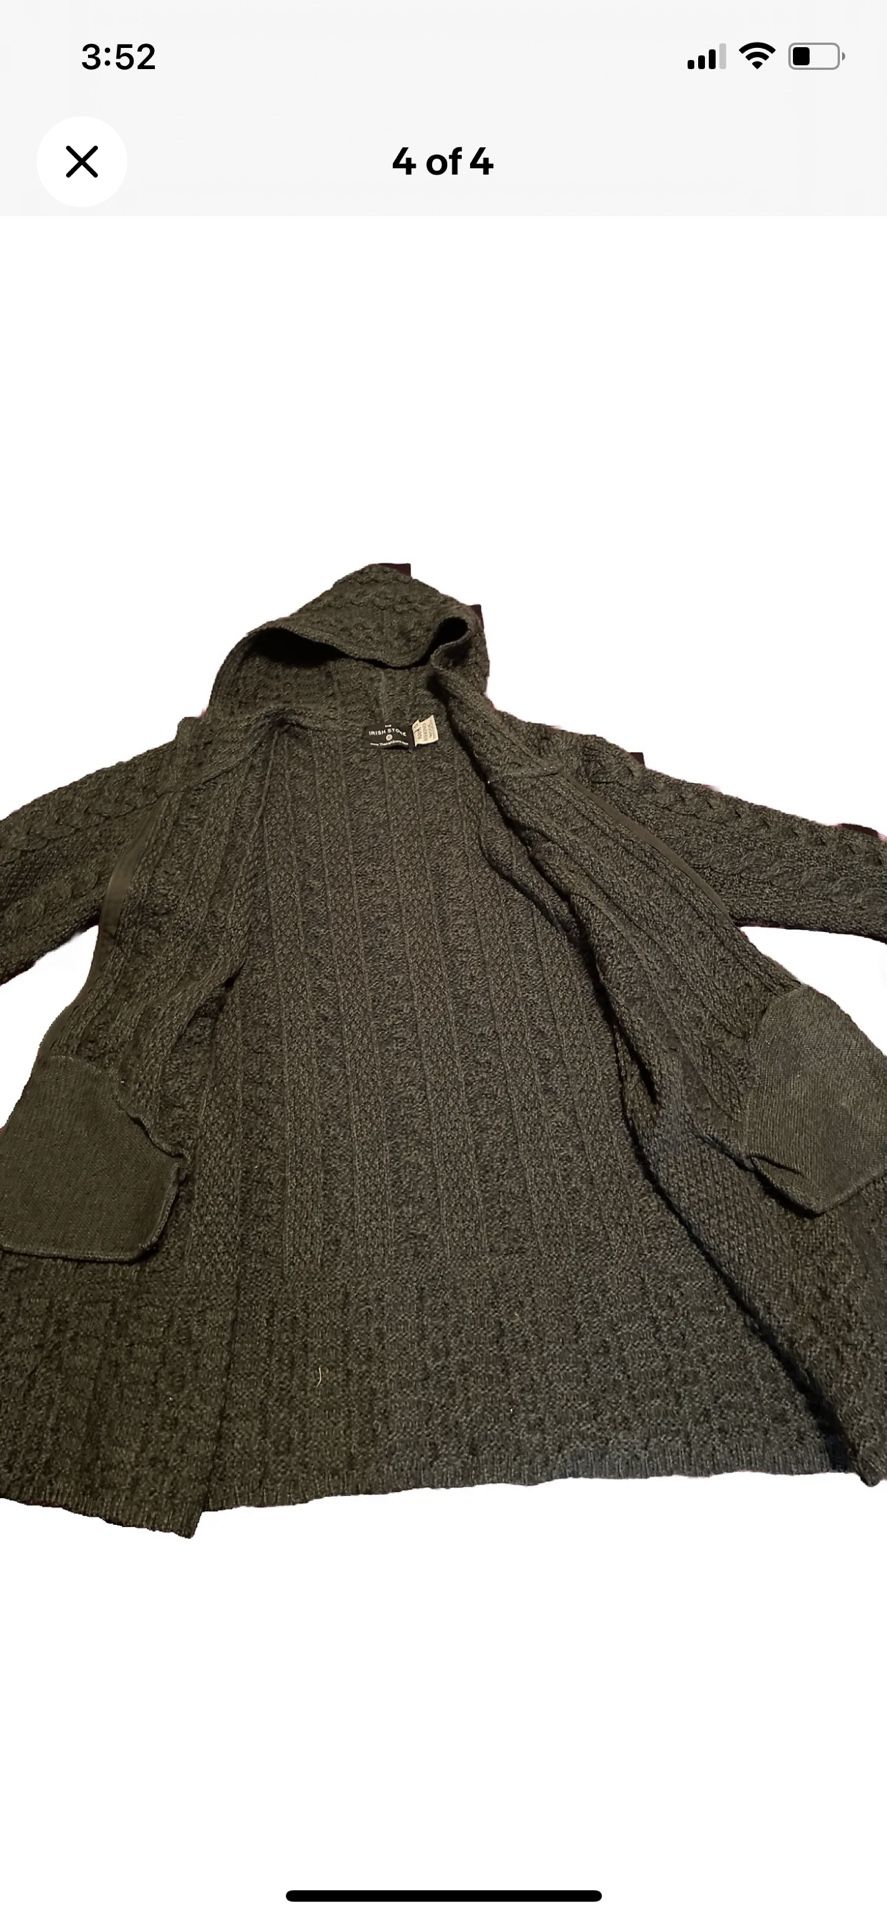 The Irish Store Dark Green Merino Wool Green Sweater Size Small Cable Knit